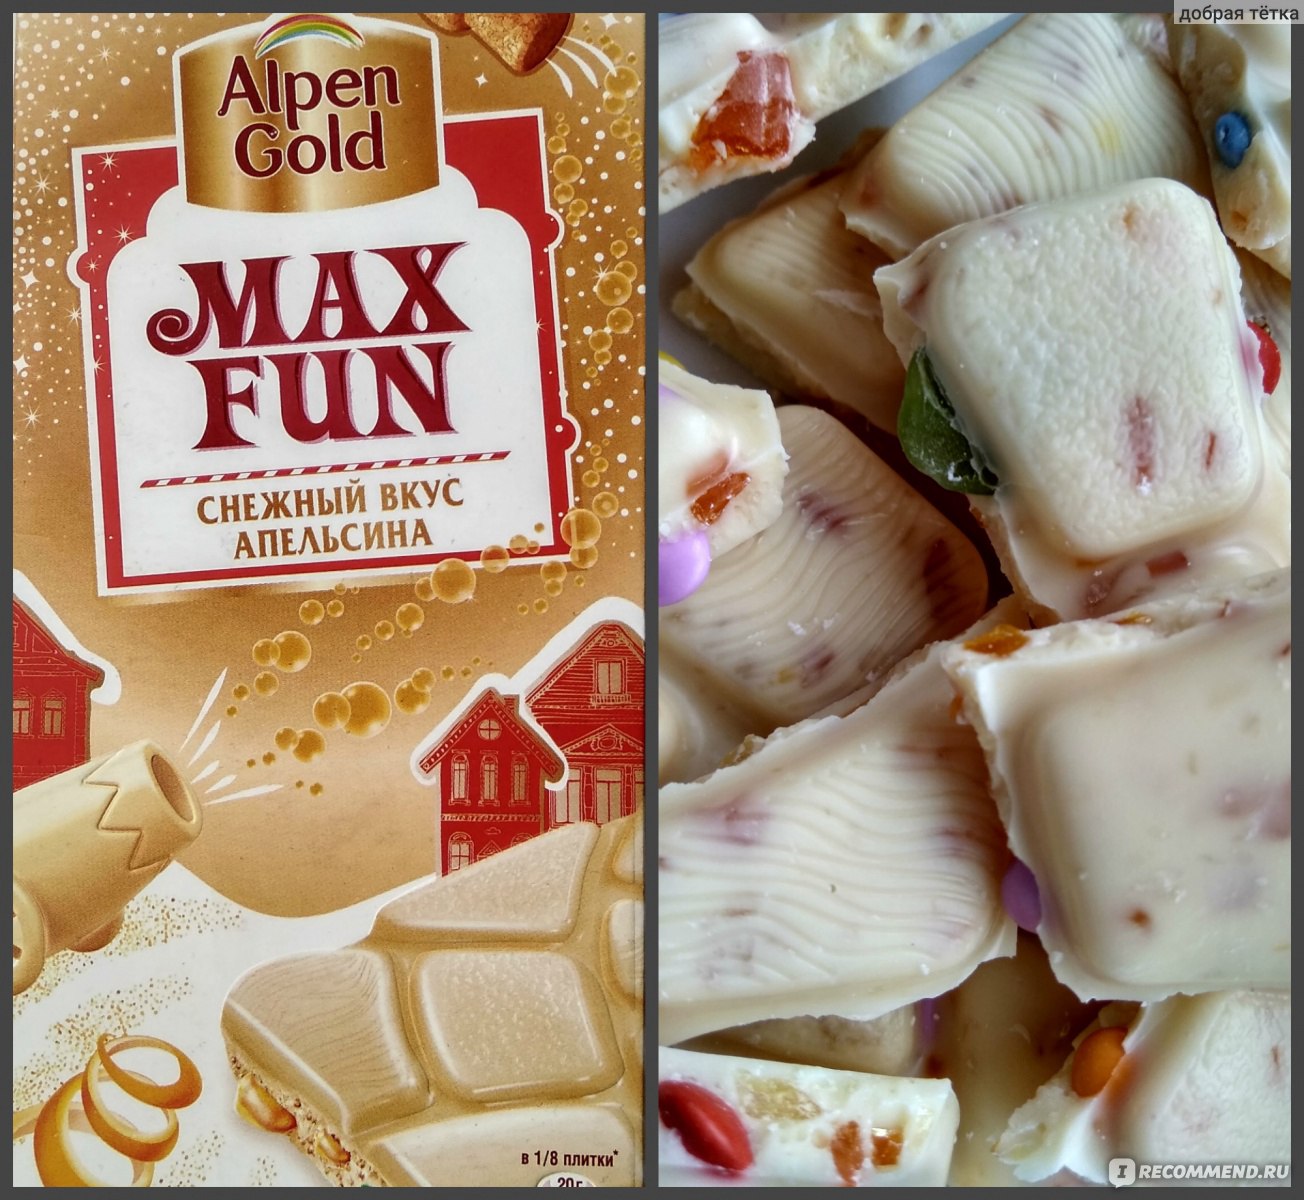 Alpen Gold Max fun белый шоколад «снежный вкус апельсина»;